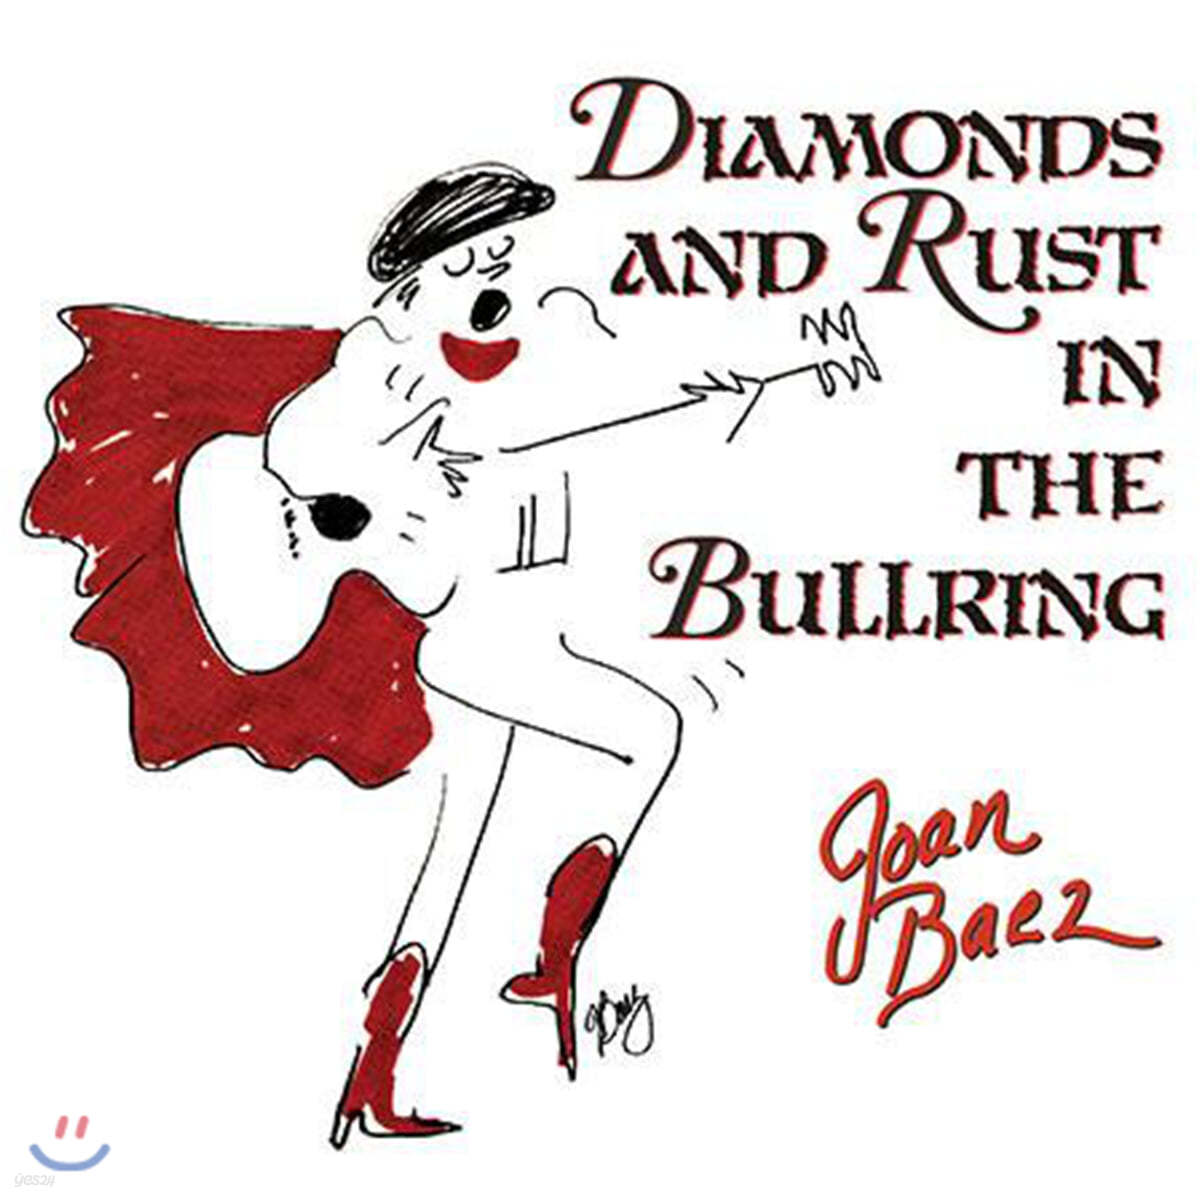 Joan Baez (조안 바에즈) - Diamonds and Rust in the Bullring [2LP]